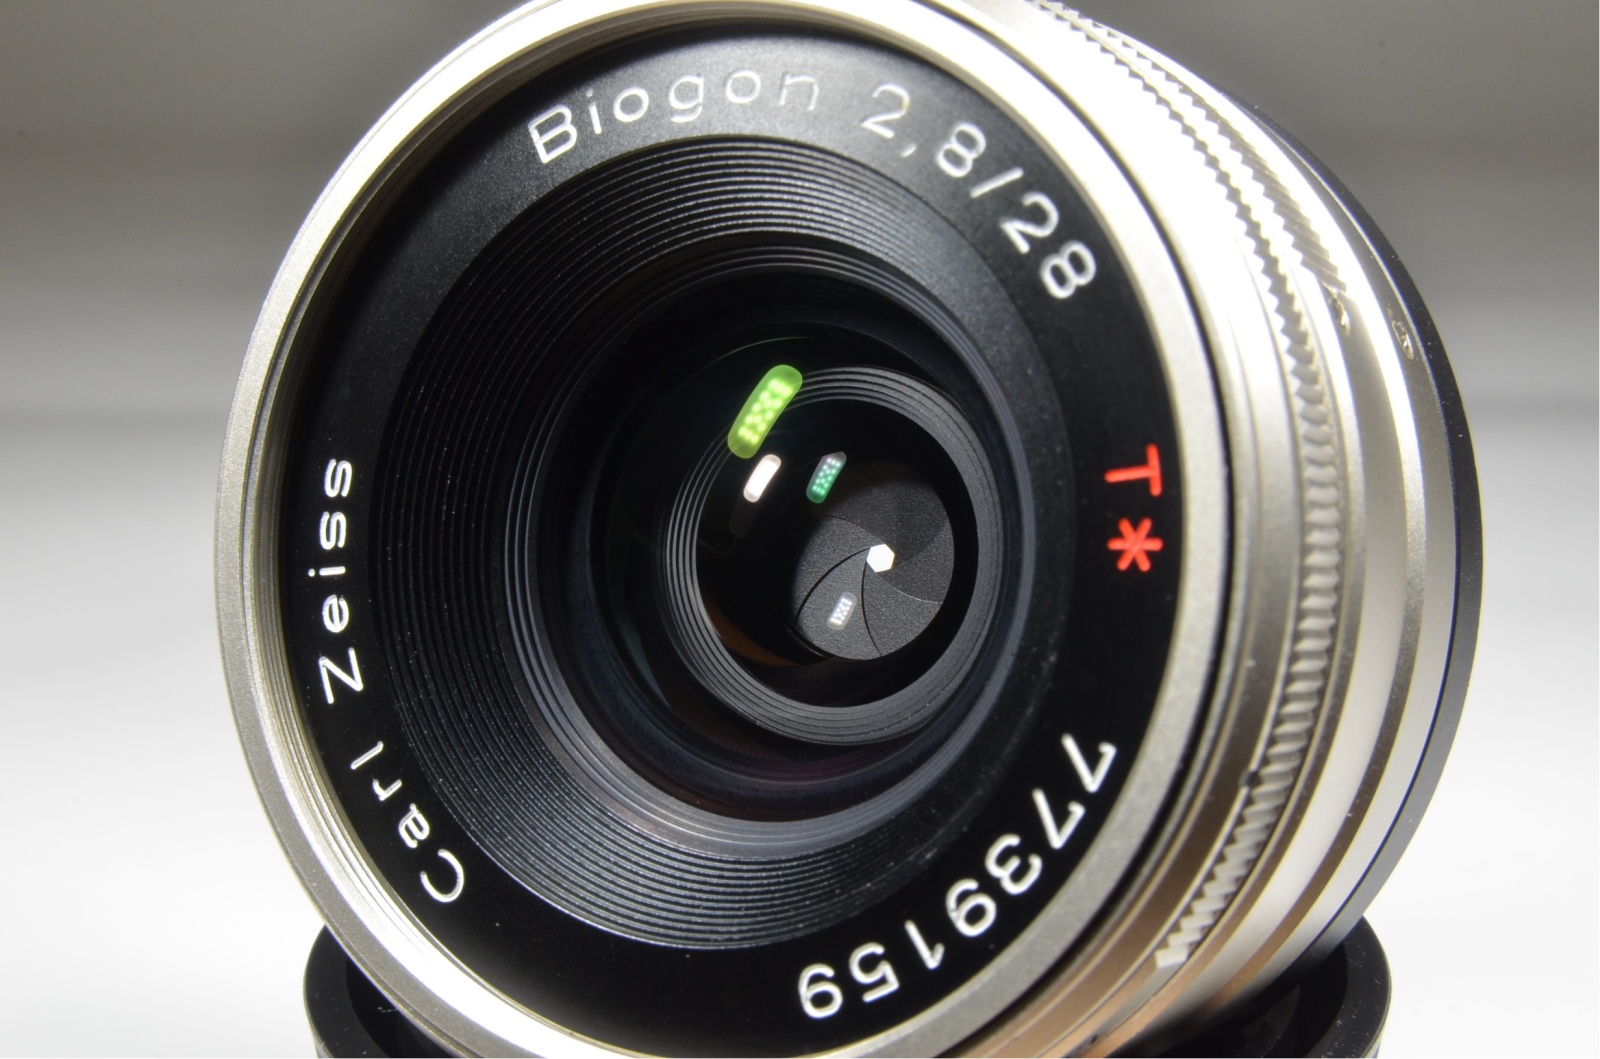 contax g2 camera / planar 45mm f2 / biogon 28mm f2.8 / sonnar 90mm f2.8 / tla200